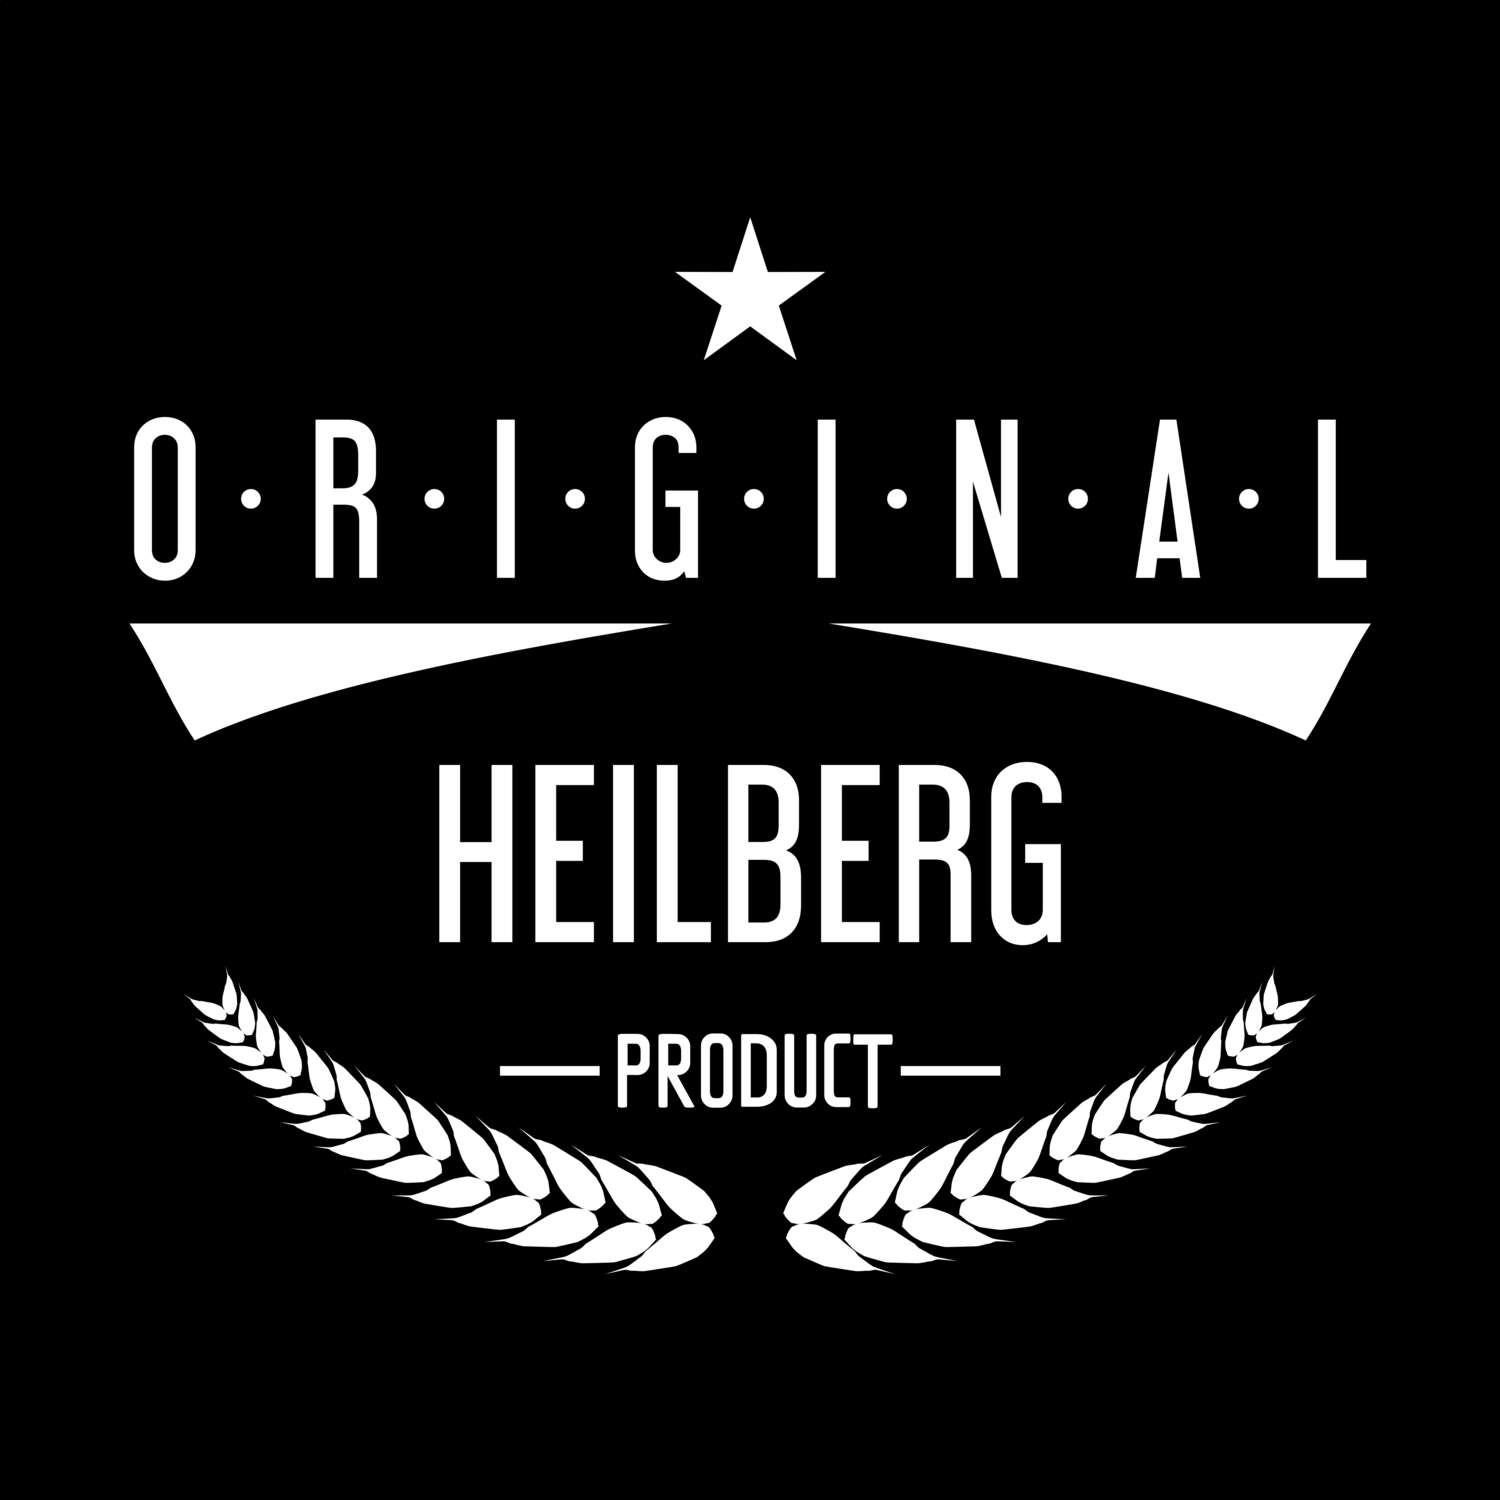 Heilberg T-Shirt »Original Product«